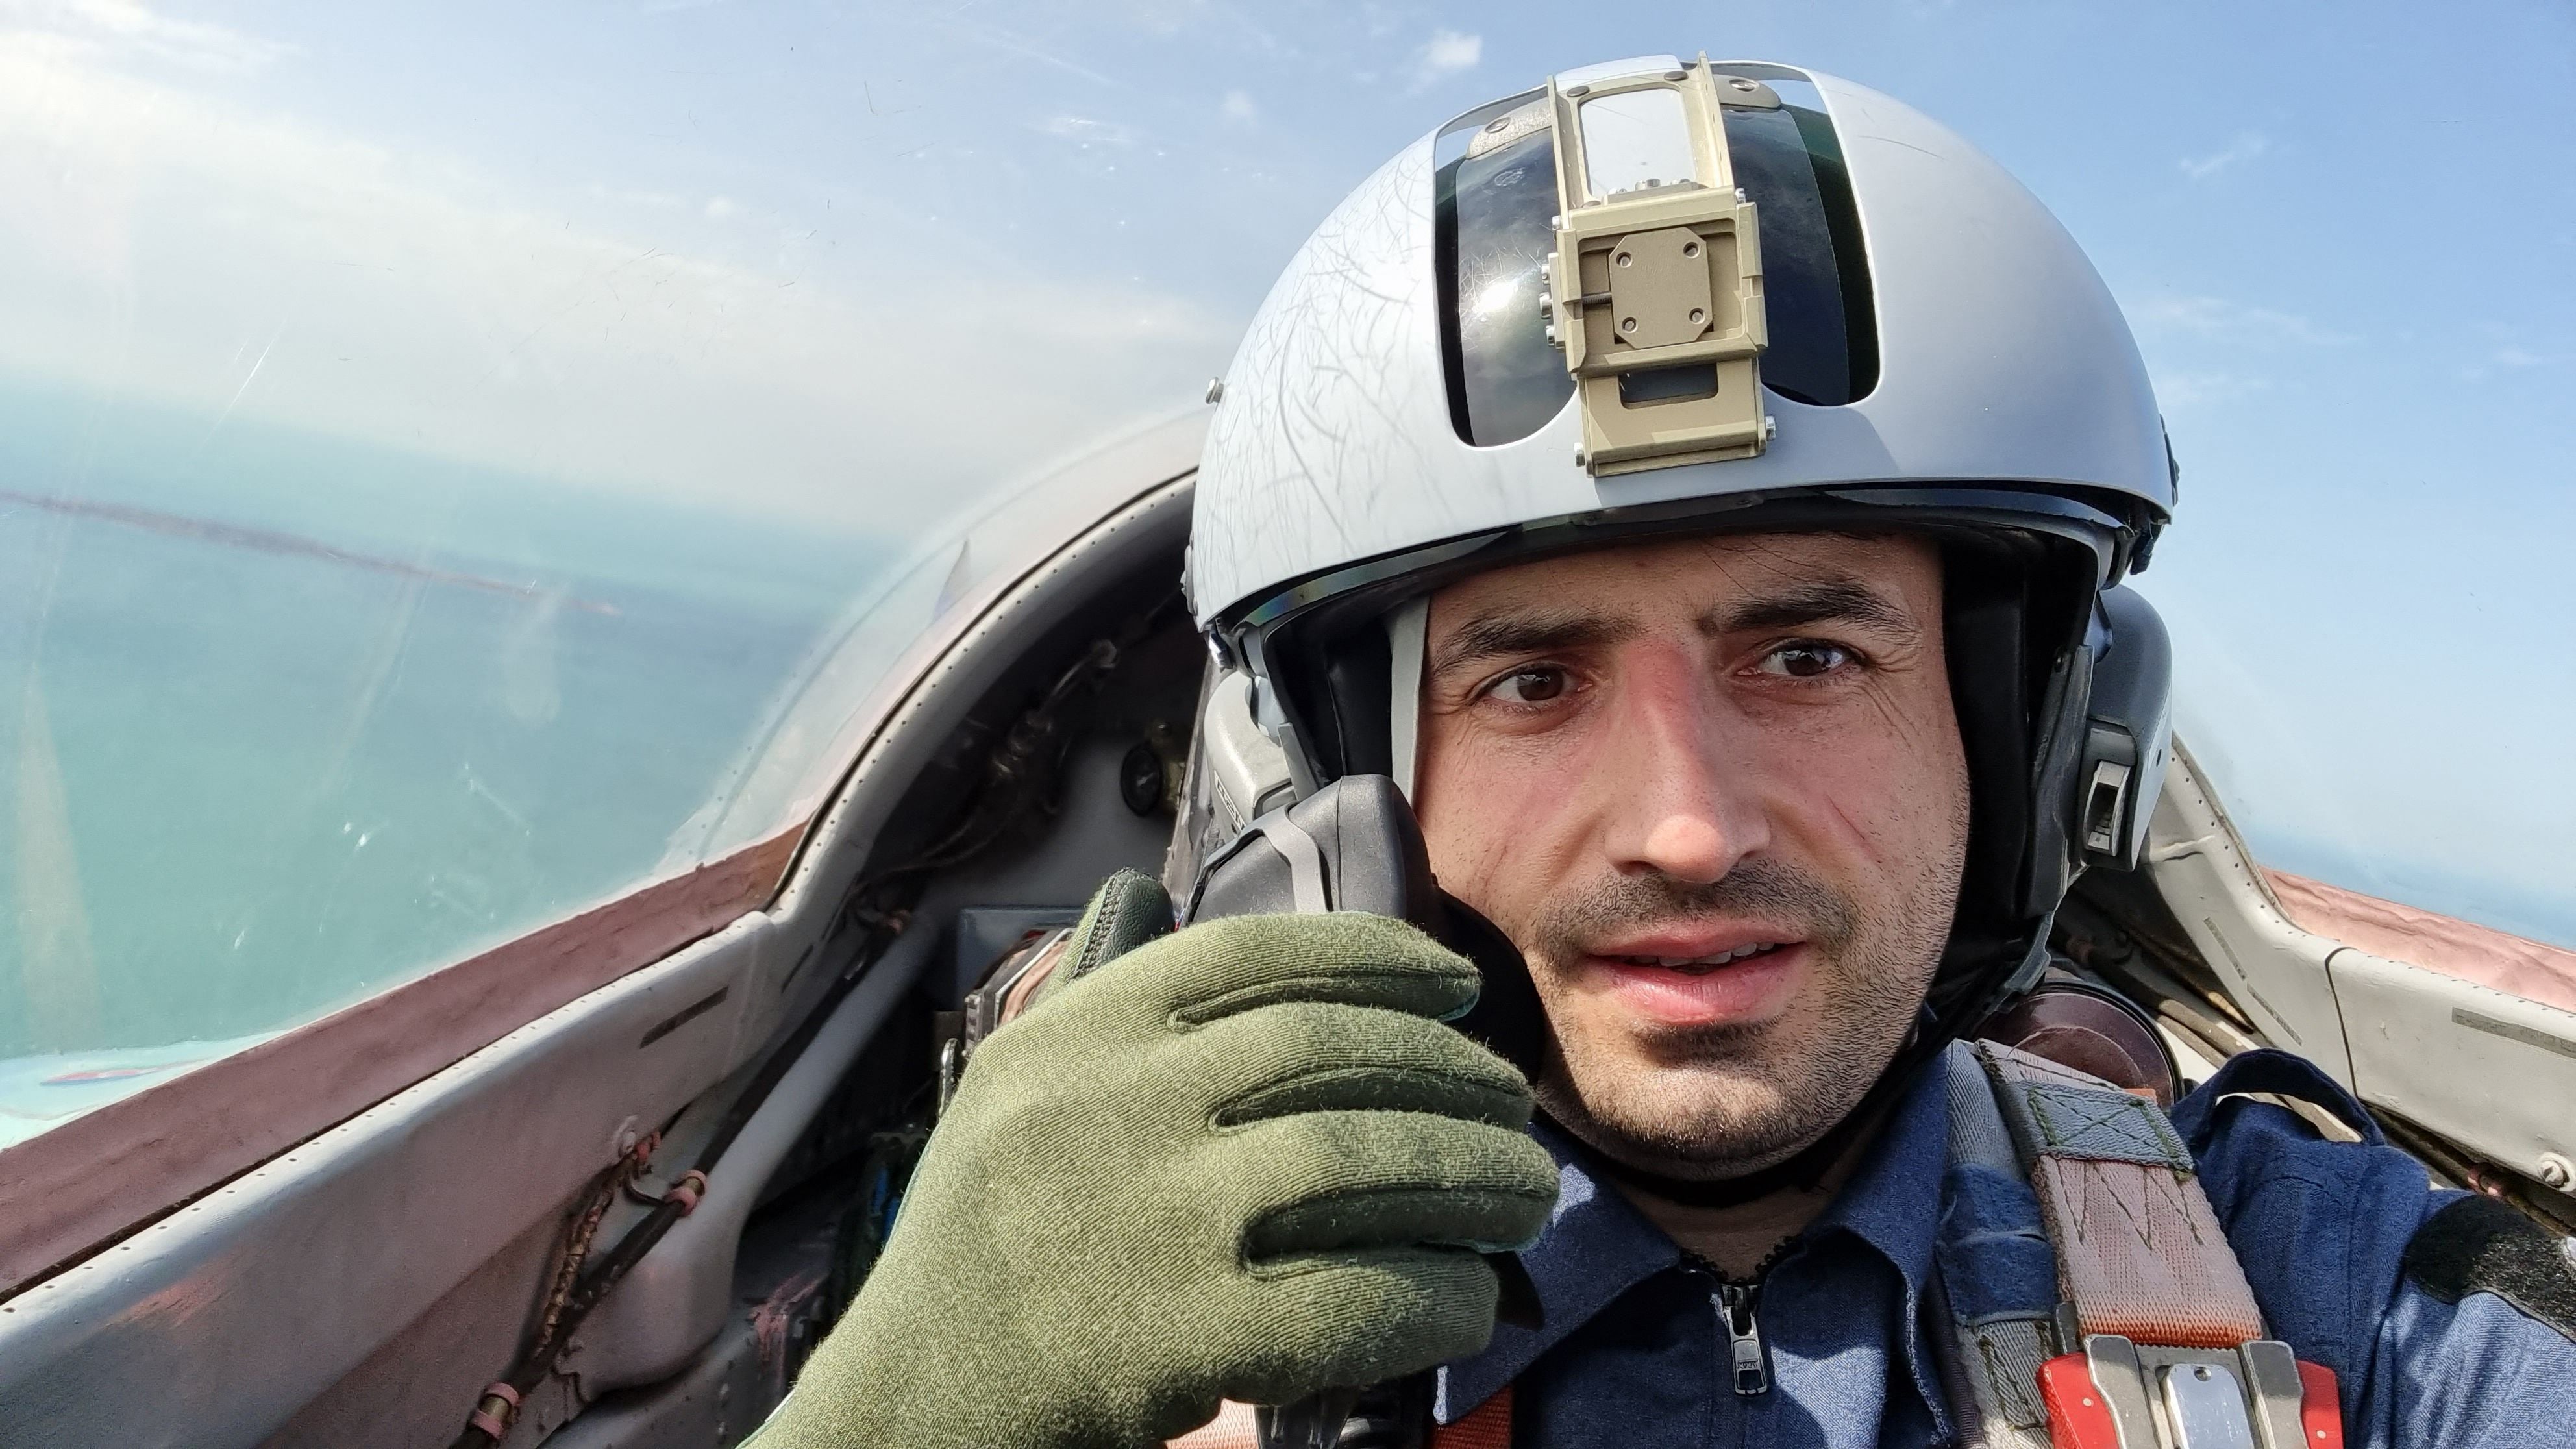 Selcuk Bayraktar, chief technology officer at the Turkish aerospace company Baykar Defence, in an Azerbaijani air force Mikoyan MiG-29, in Baku